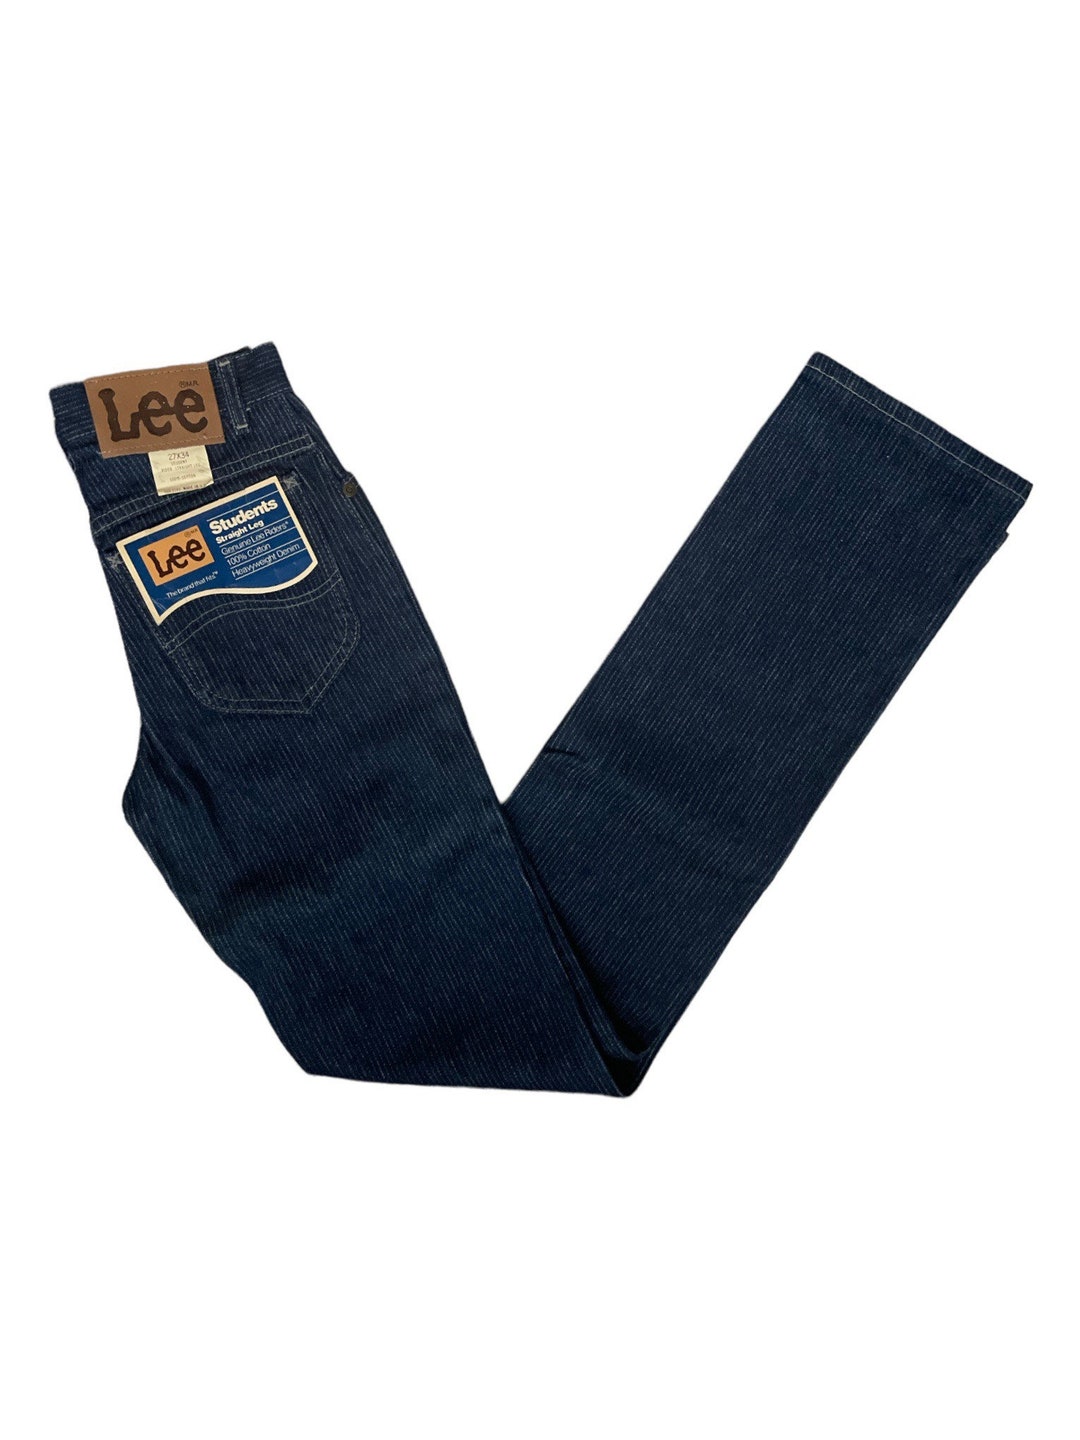 Vintage Lee Railroad Stripe Jeans Straight Leg Size 27x34 - Etsy